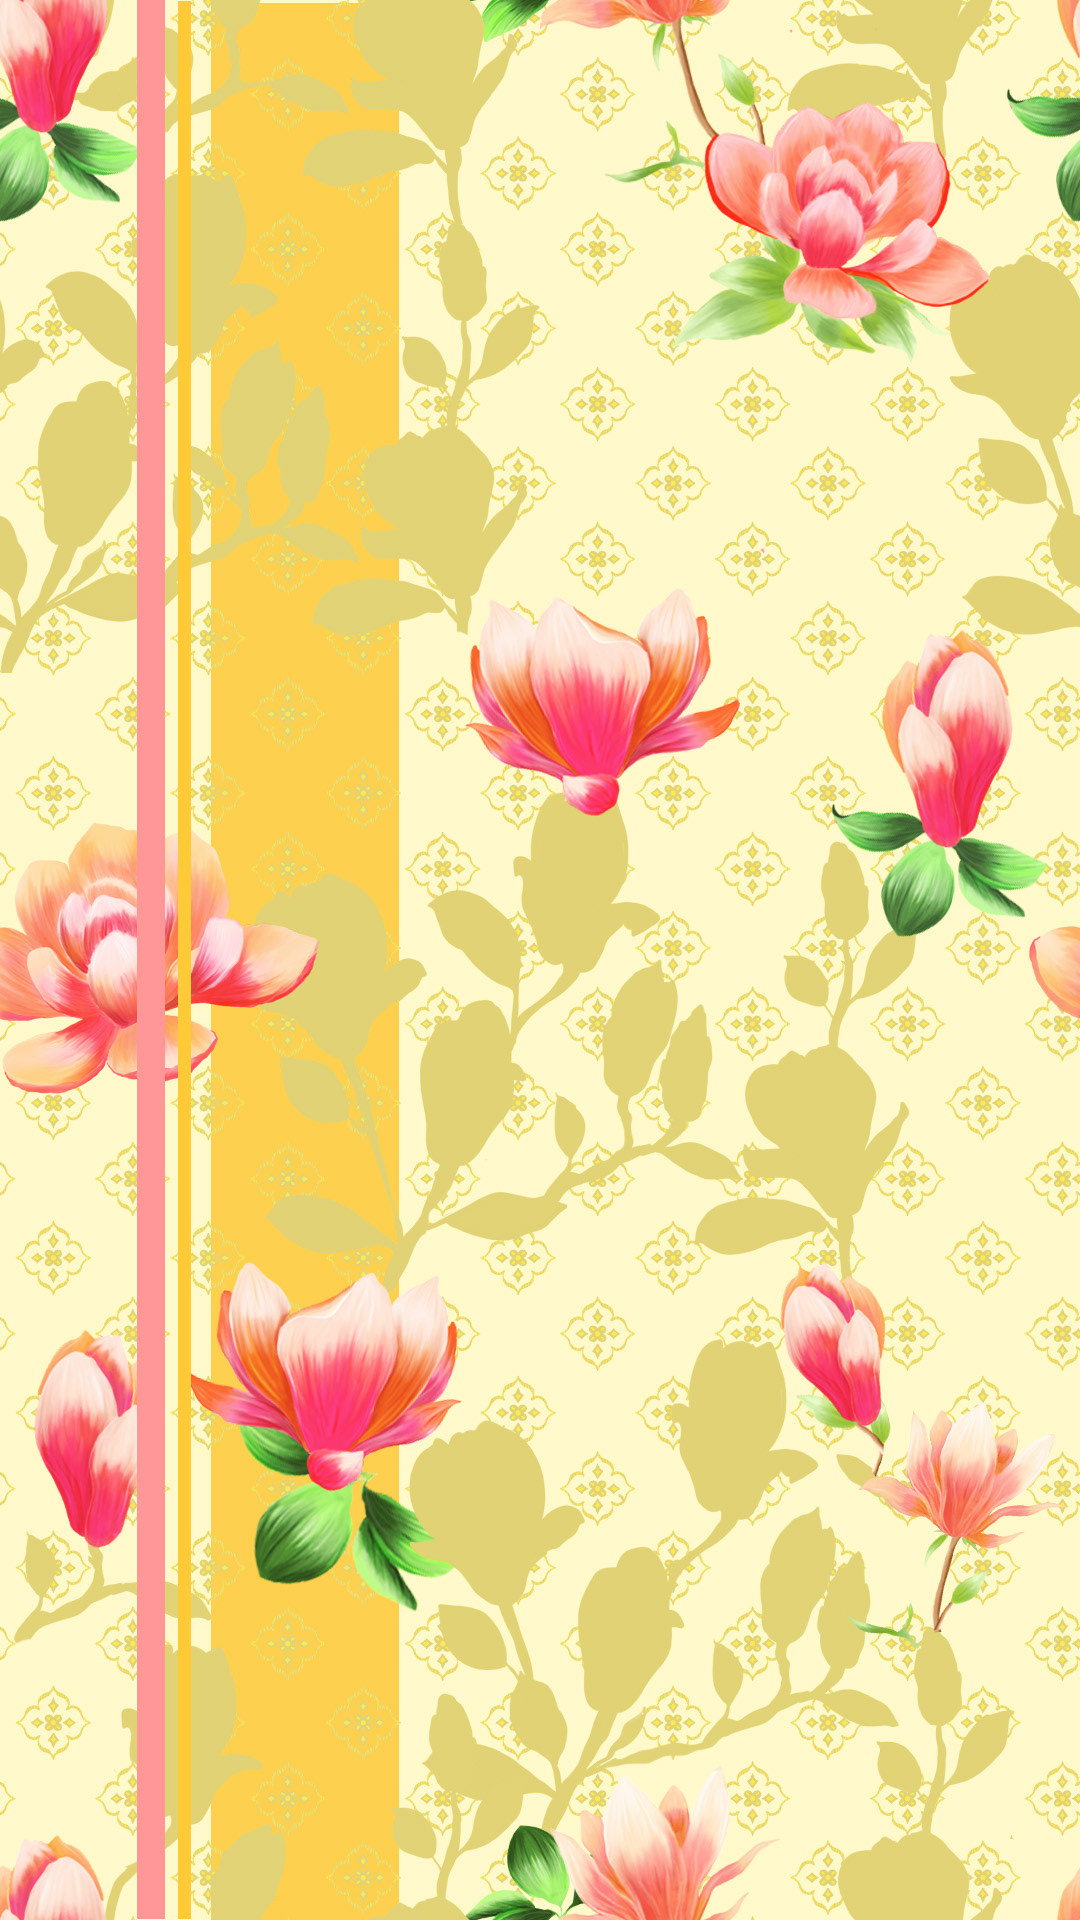 magnolia pattern seamless textile floral Nature surface design print Flowers plants